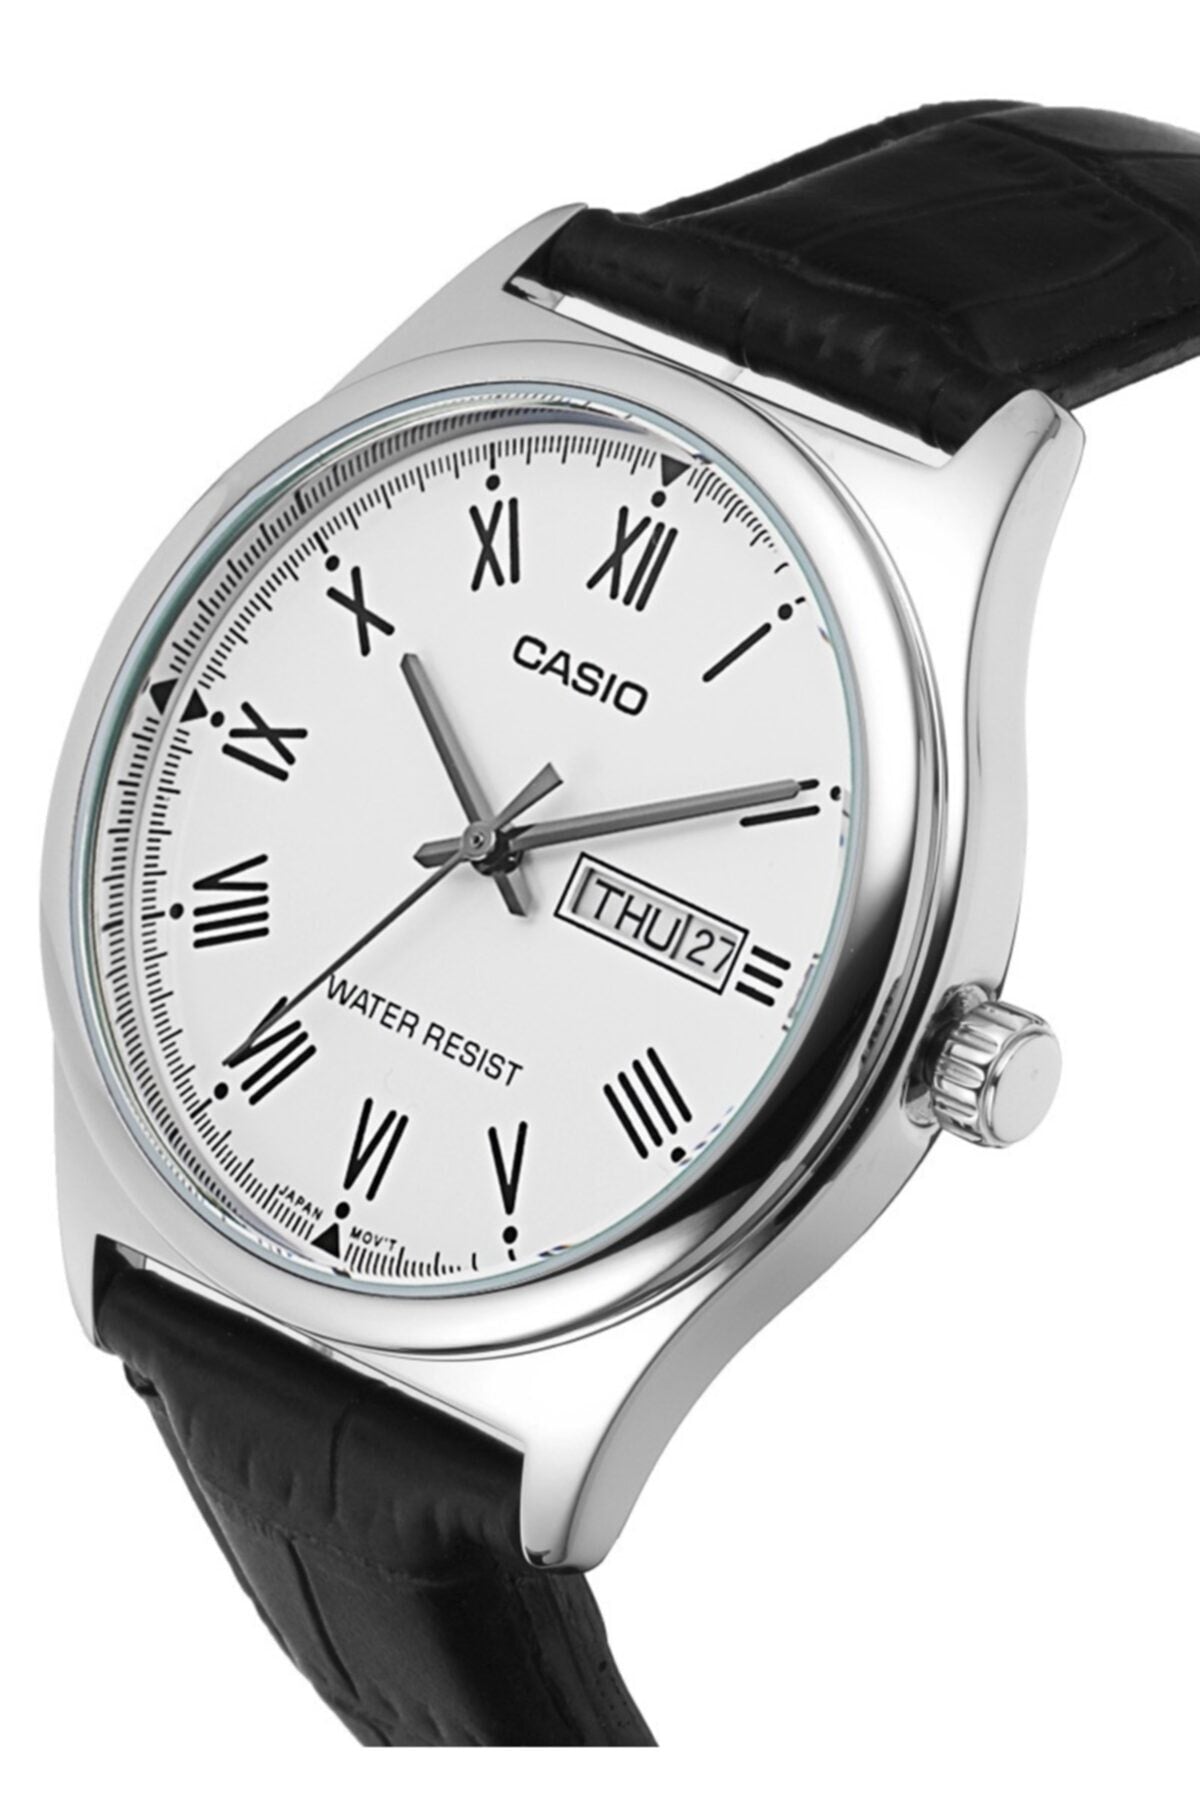 Men's Wristwatch MTP-V006L-7BUDF